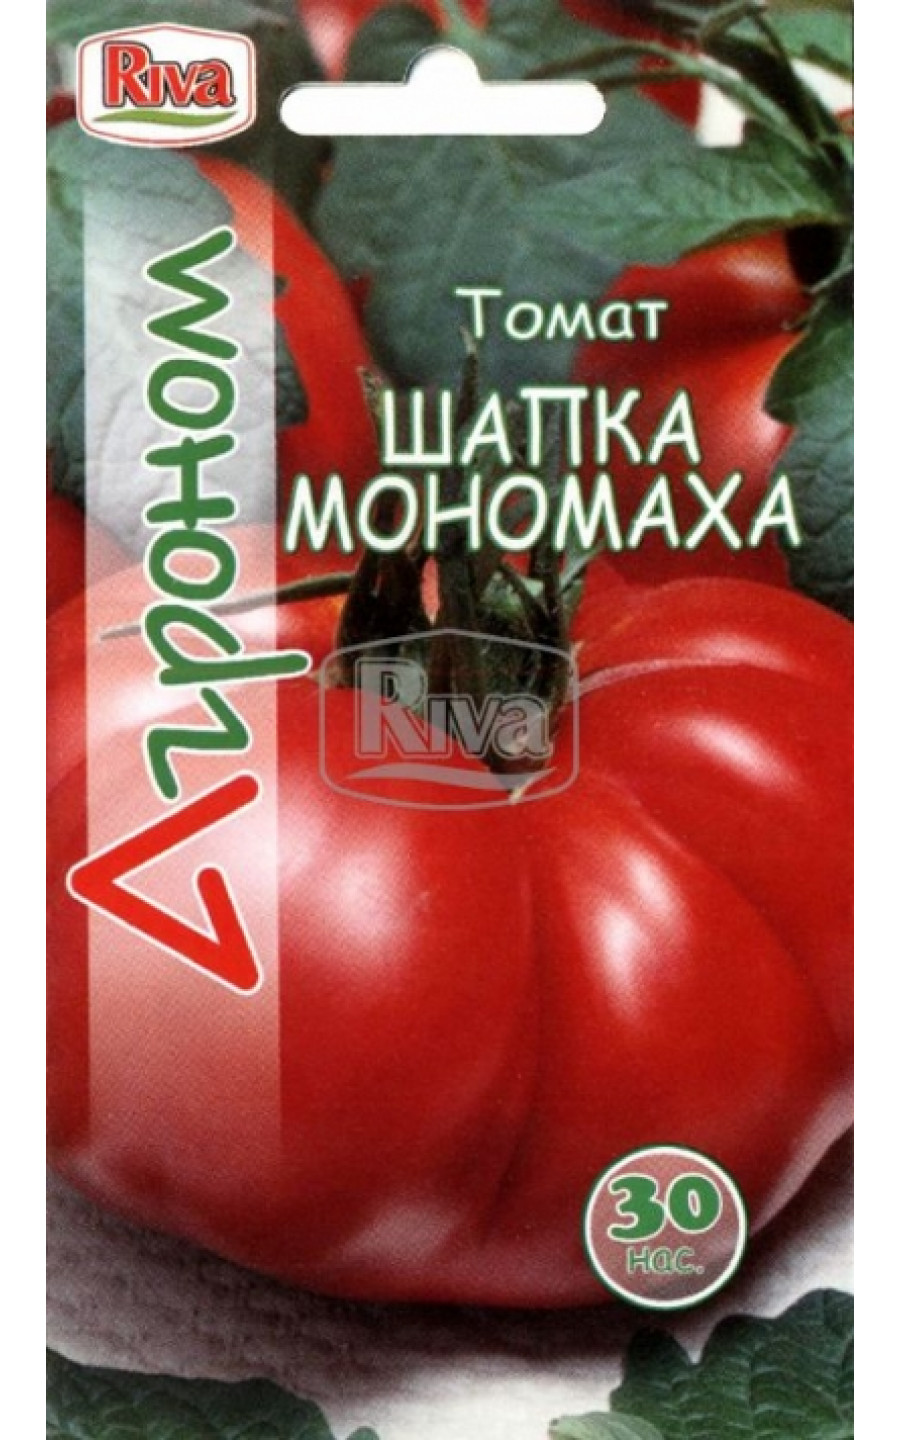 Семена шапка Мономаха помидоры